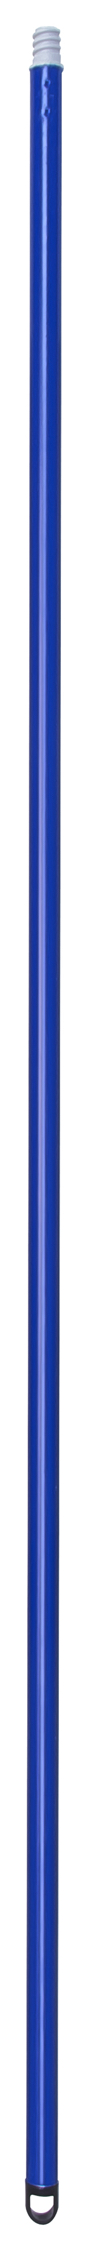 Рукоятка HACCPER эконом, 1370 мм, синяя